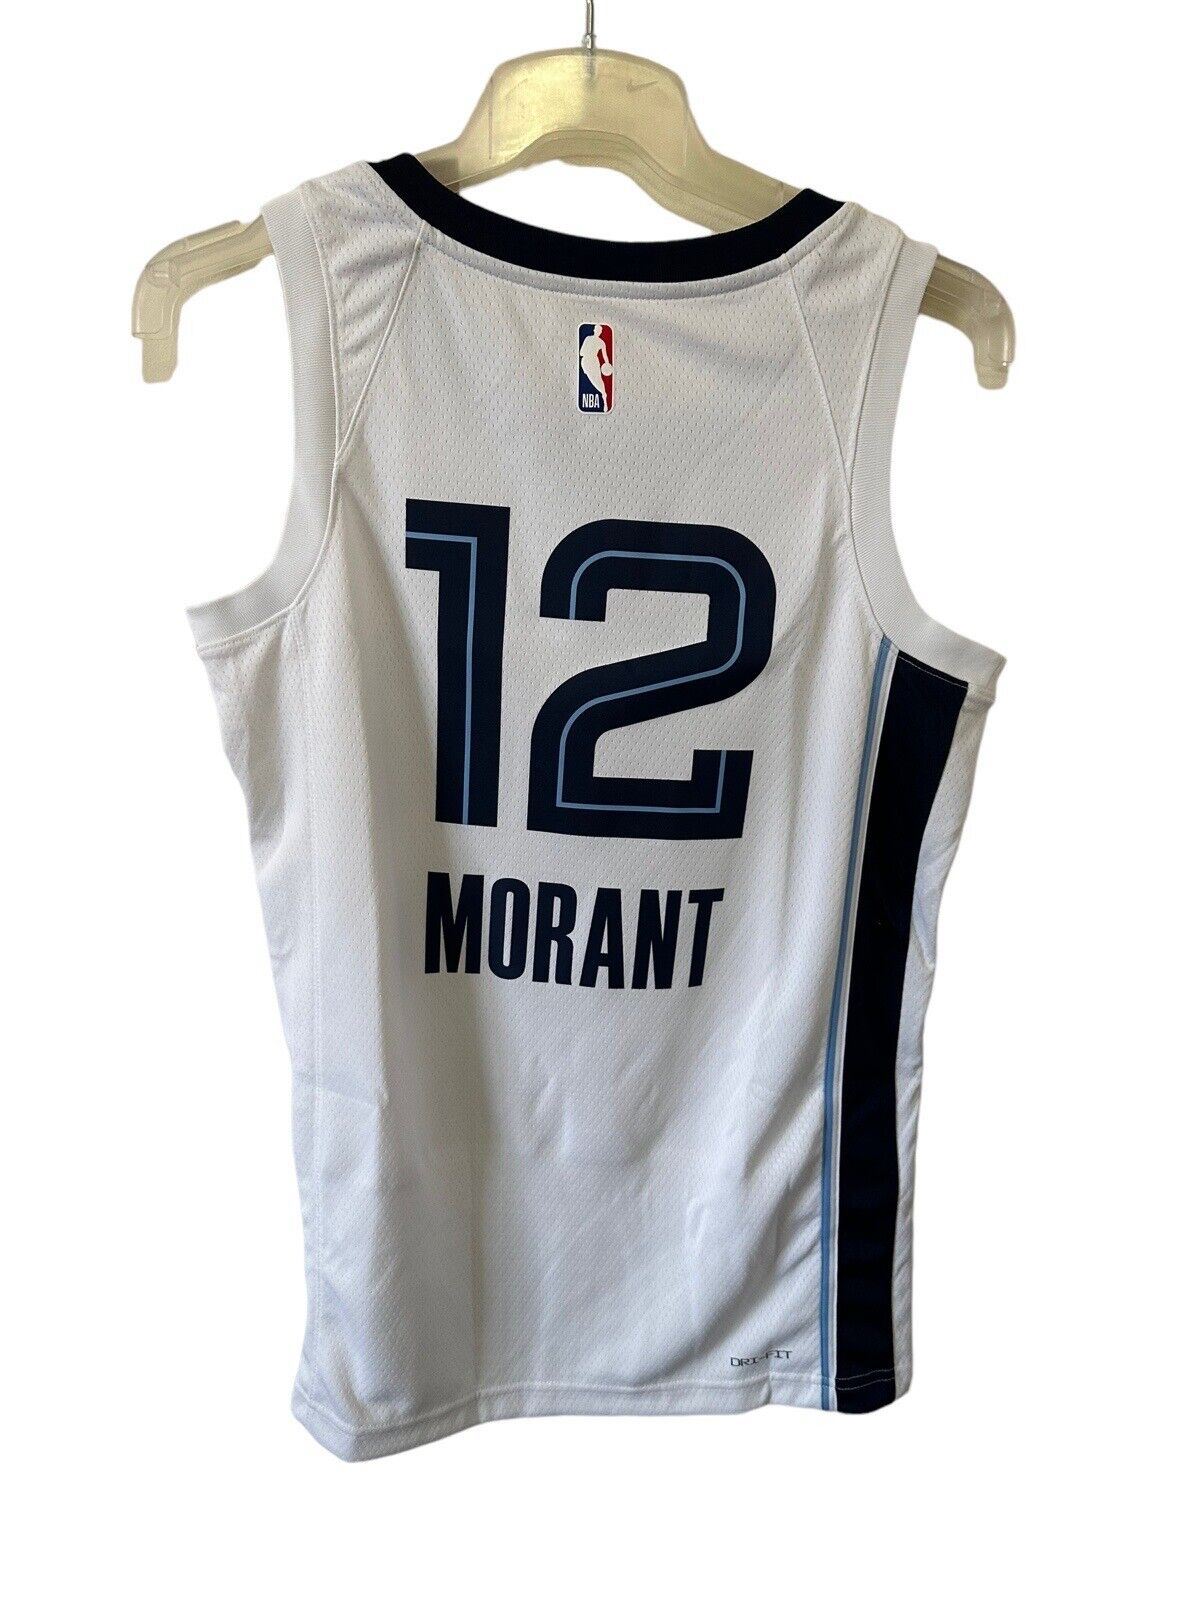 Nike NBA Memphis Grizzlies Association Edition MORANT - Men’s Small